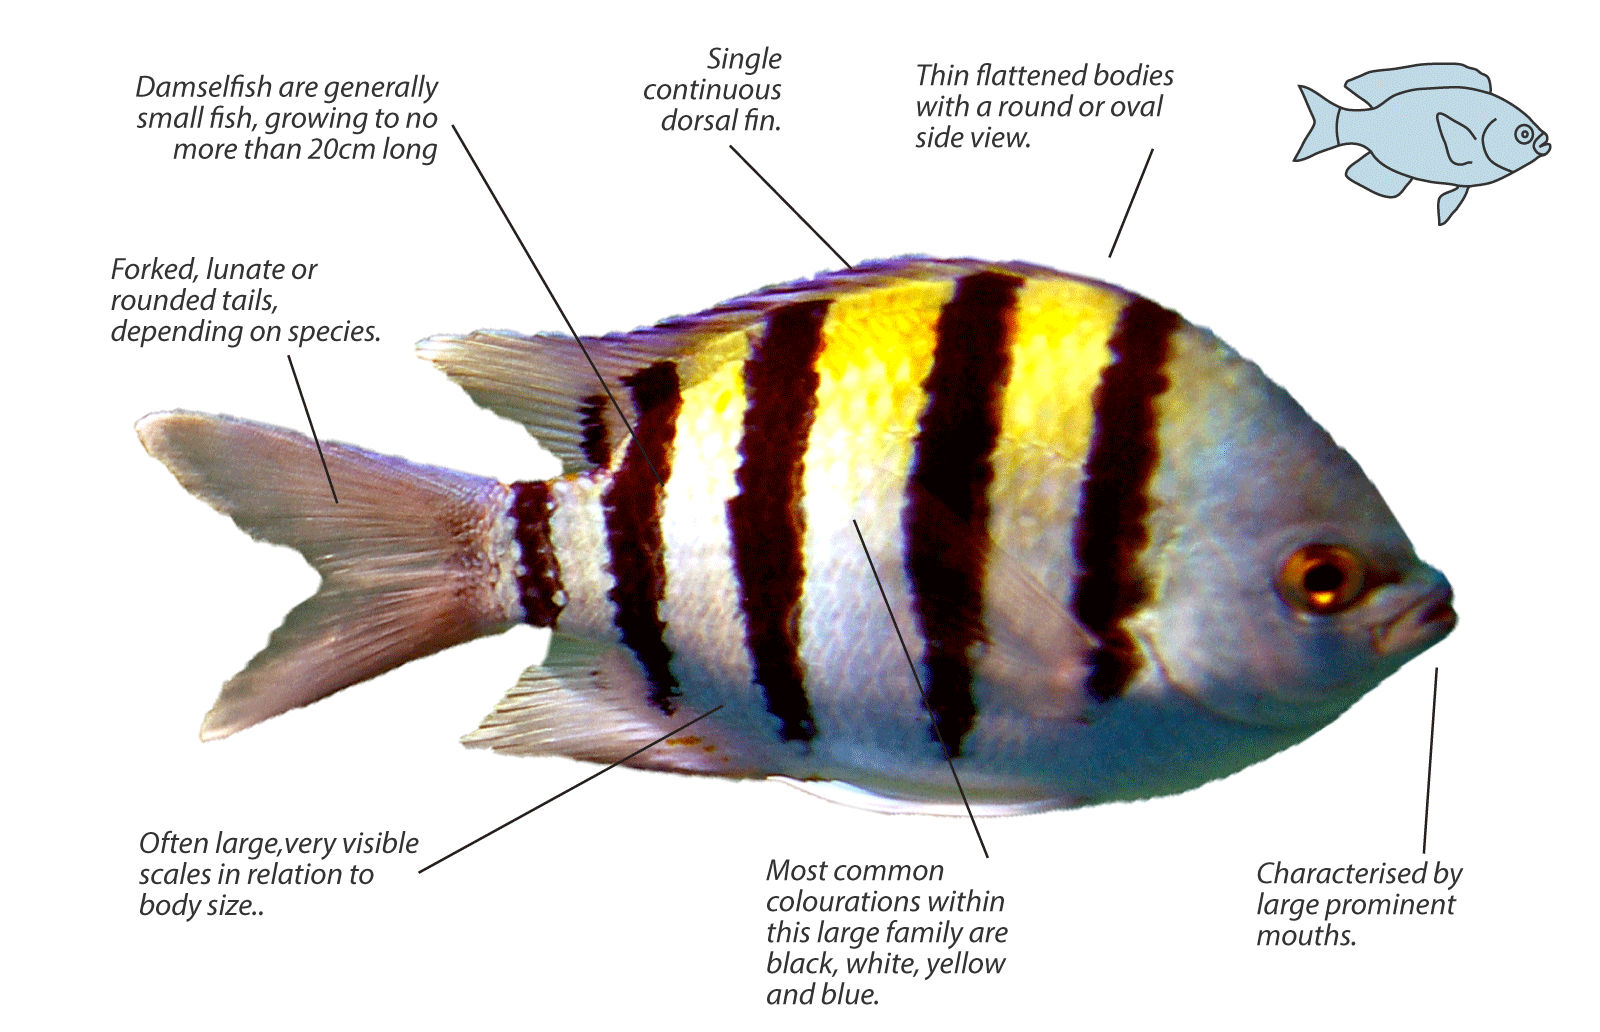 Damselfish identification image